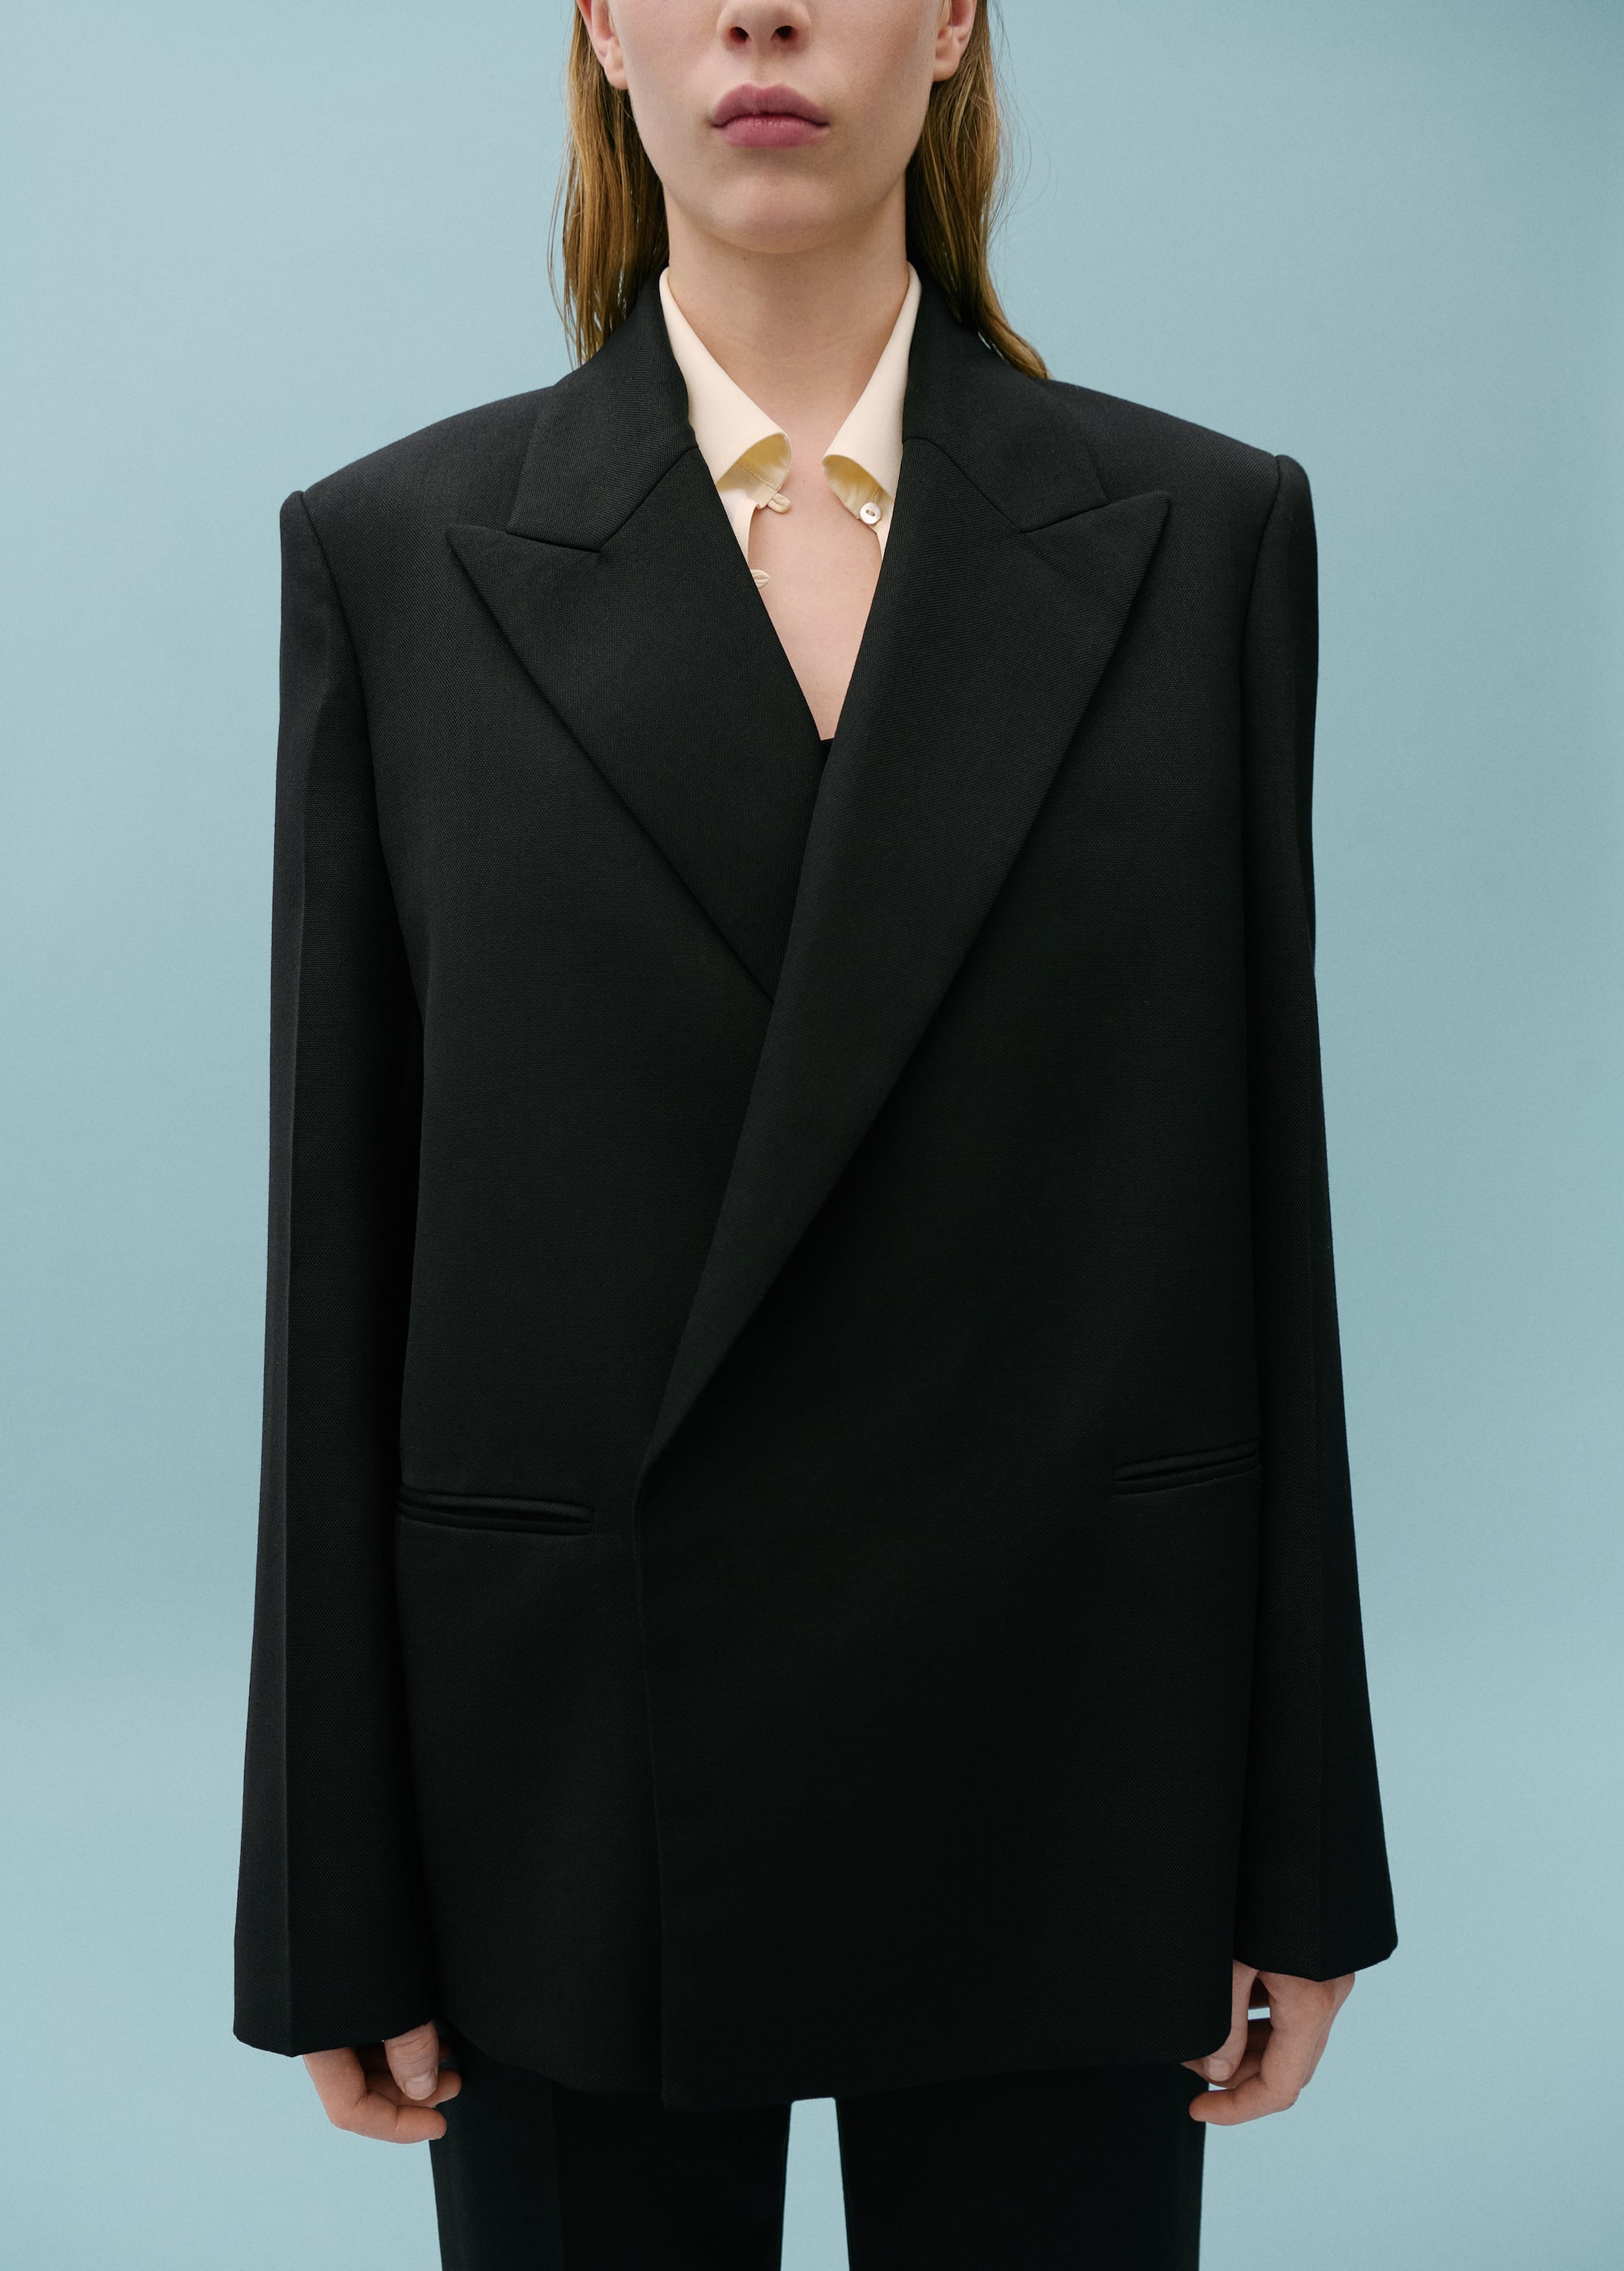 Wool-blend suit jacket - Medium plane